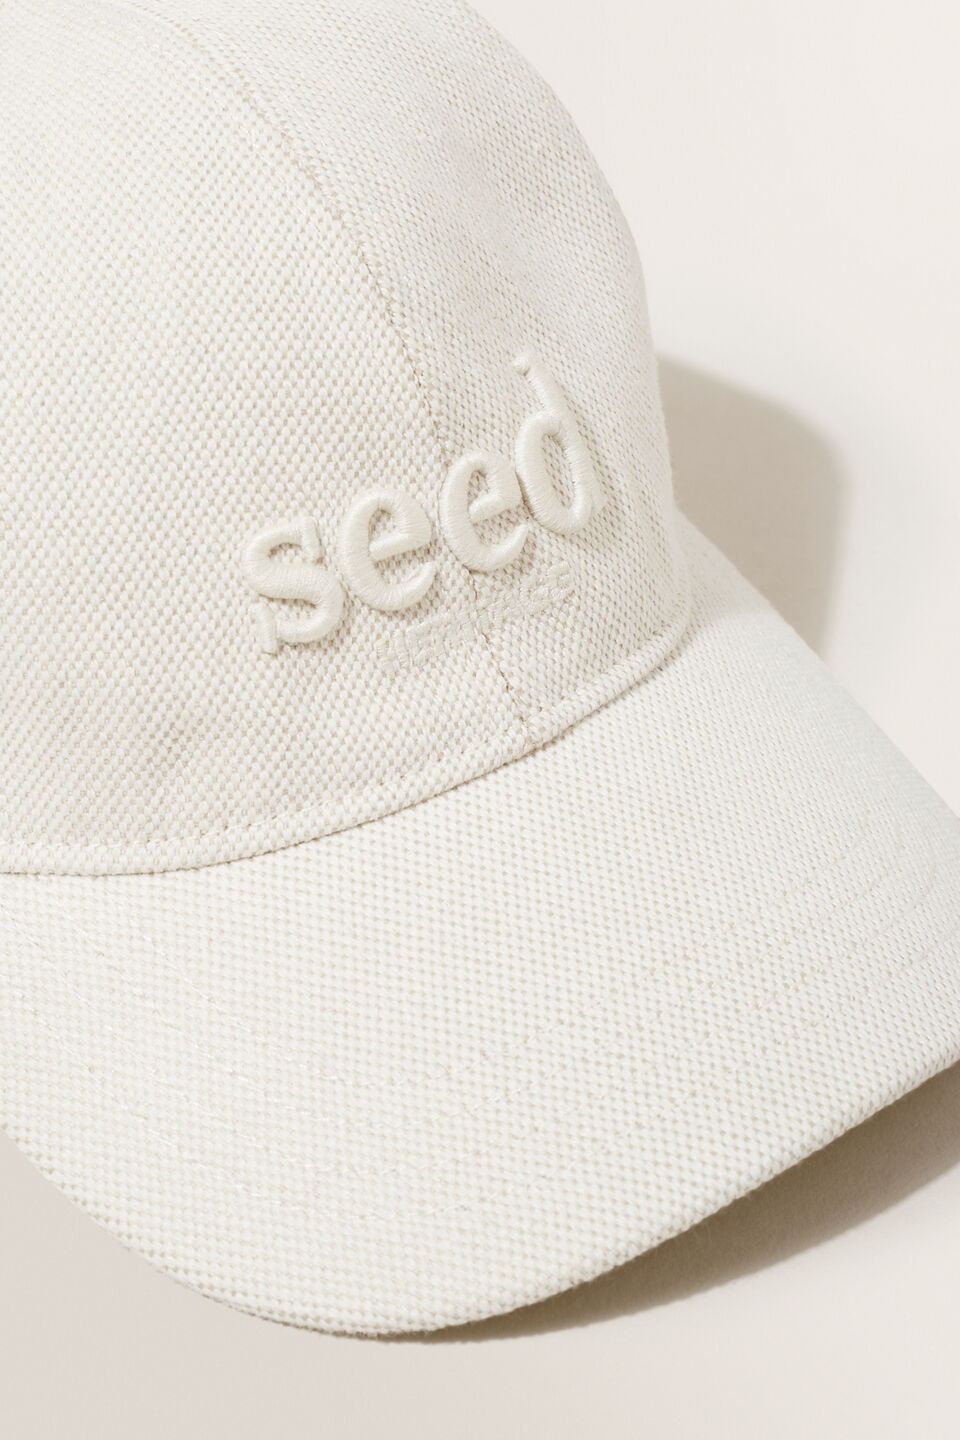 Seed Cap  Cloud Cream